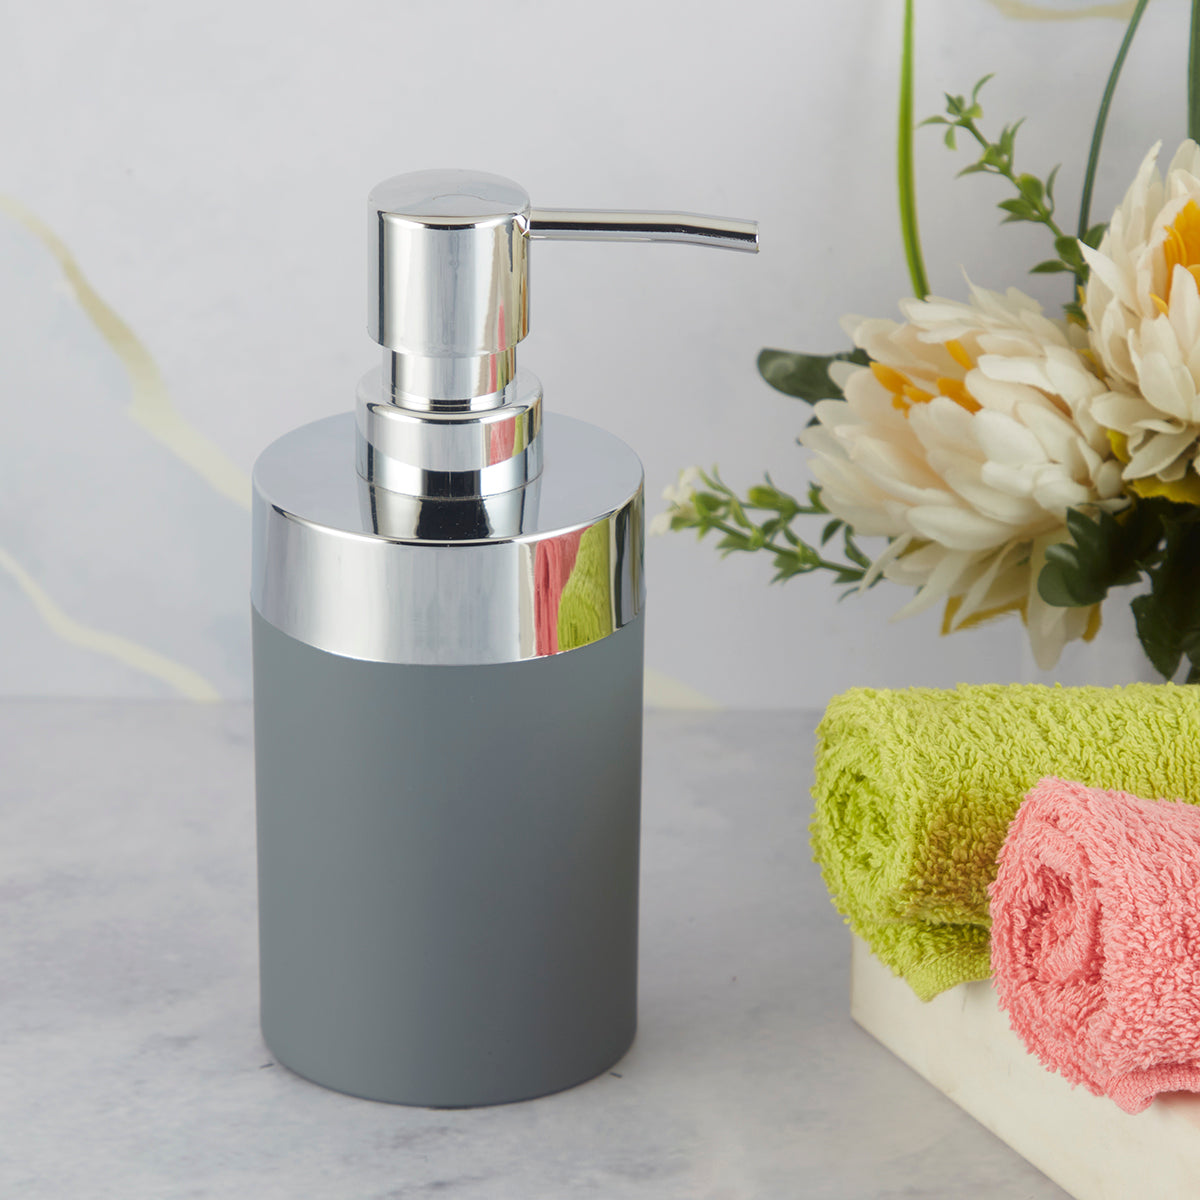 Kookee Acrylic Liquid Handwash Soap Dispenser pump for Bathroom, Hand wash refillable bottle for Kitchen wash basin, Set of 1 (9956)